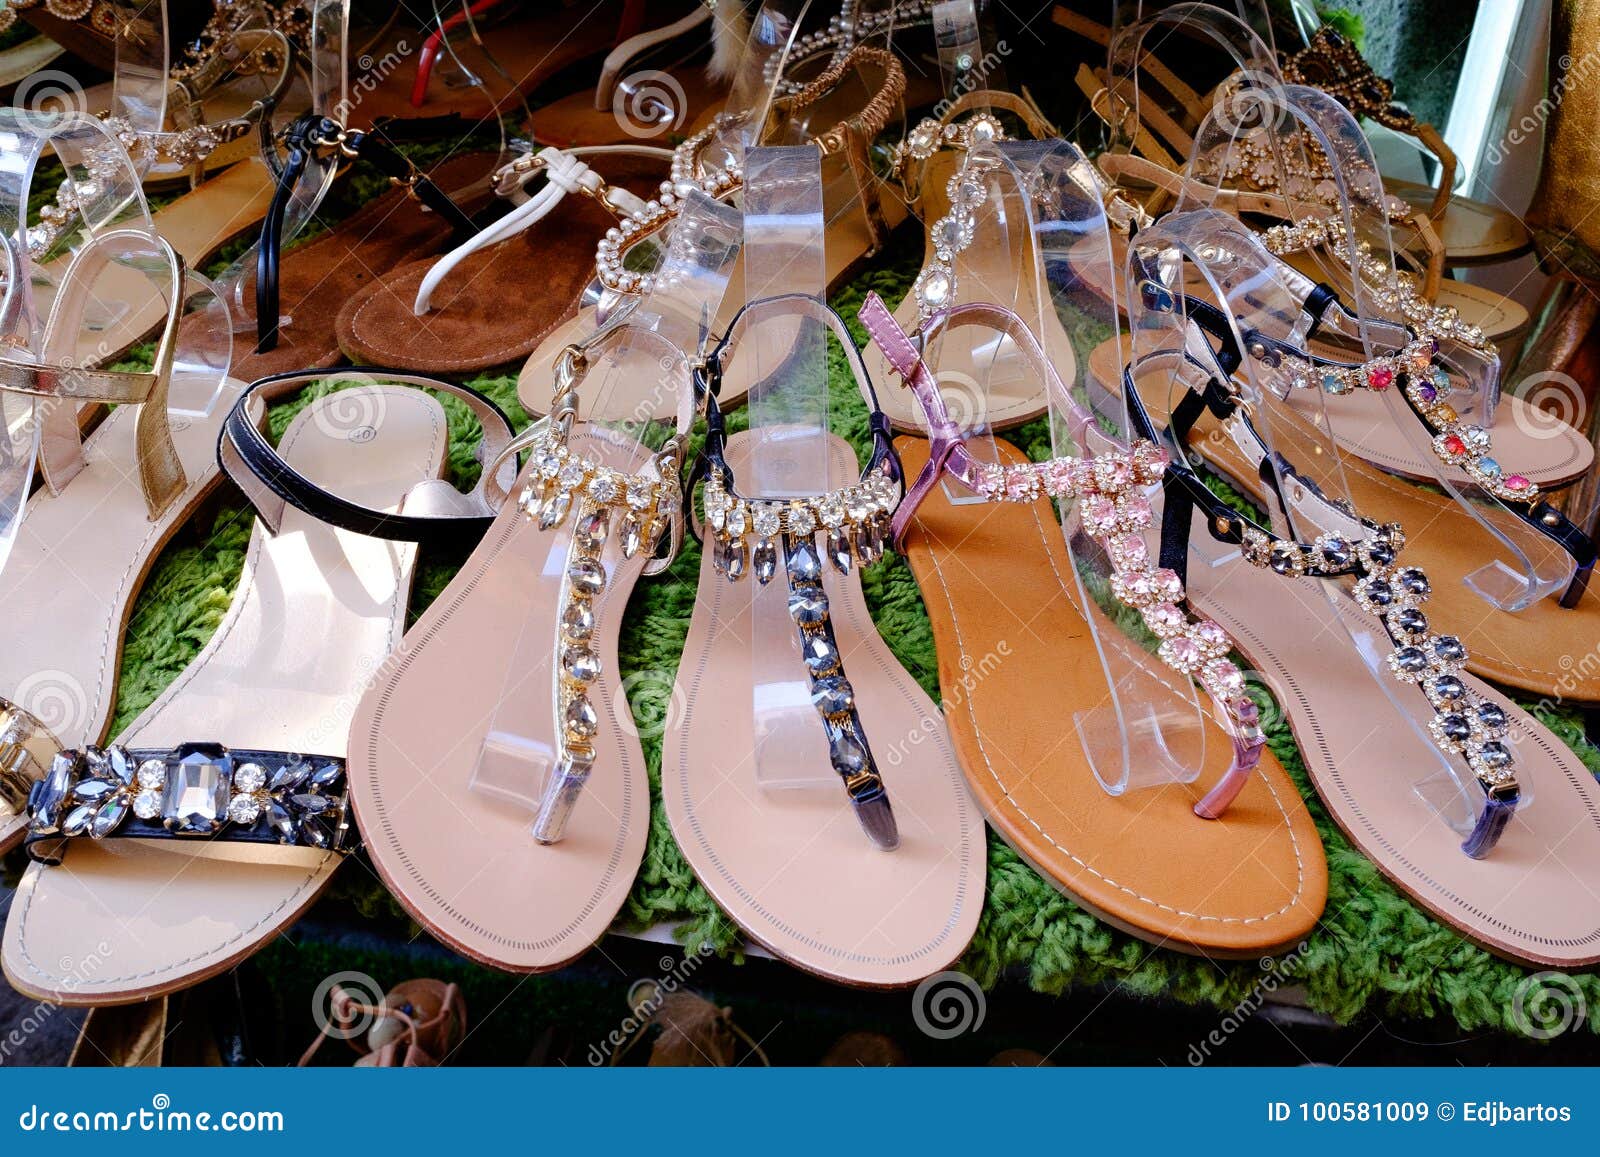 1,420 Ladies Sandals Stock Photos - Free & Royalty-Free Stock ...